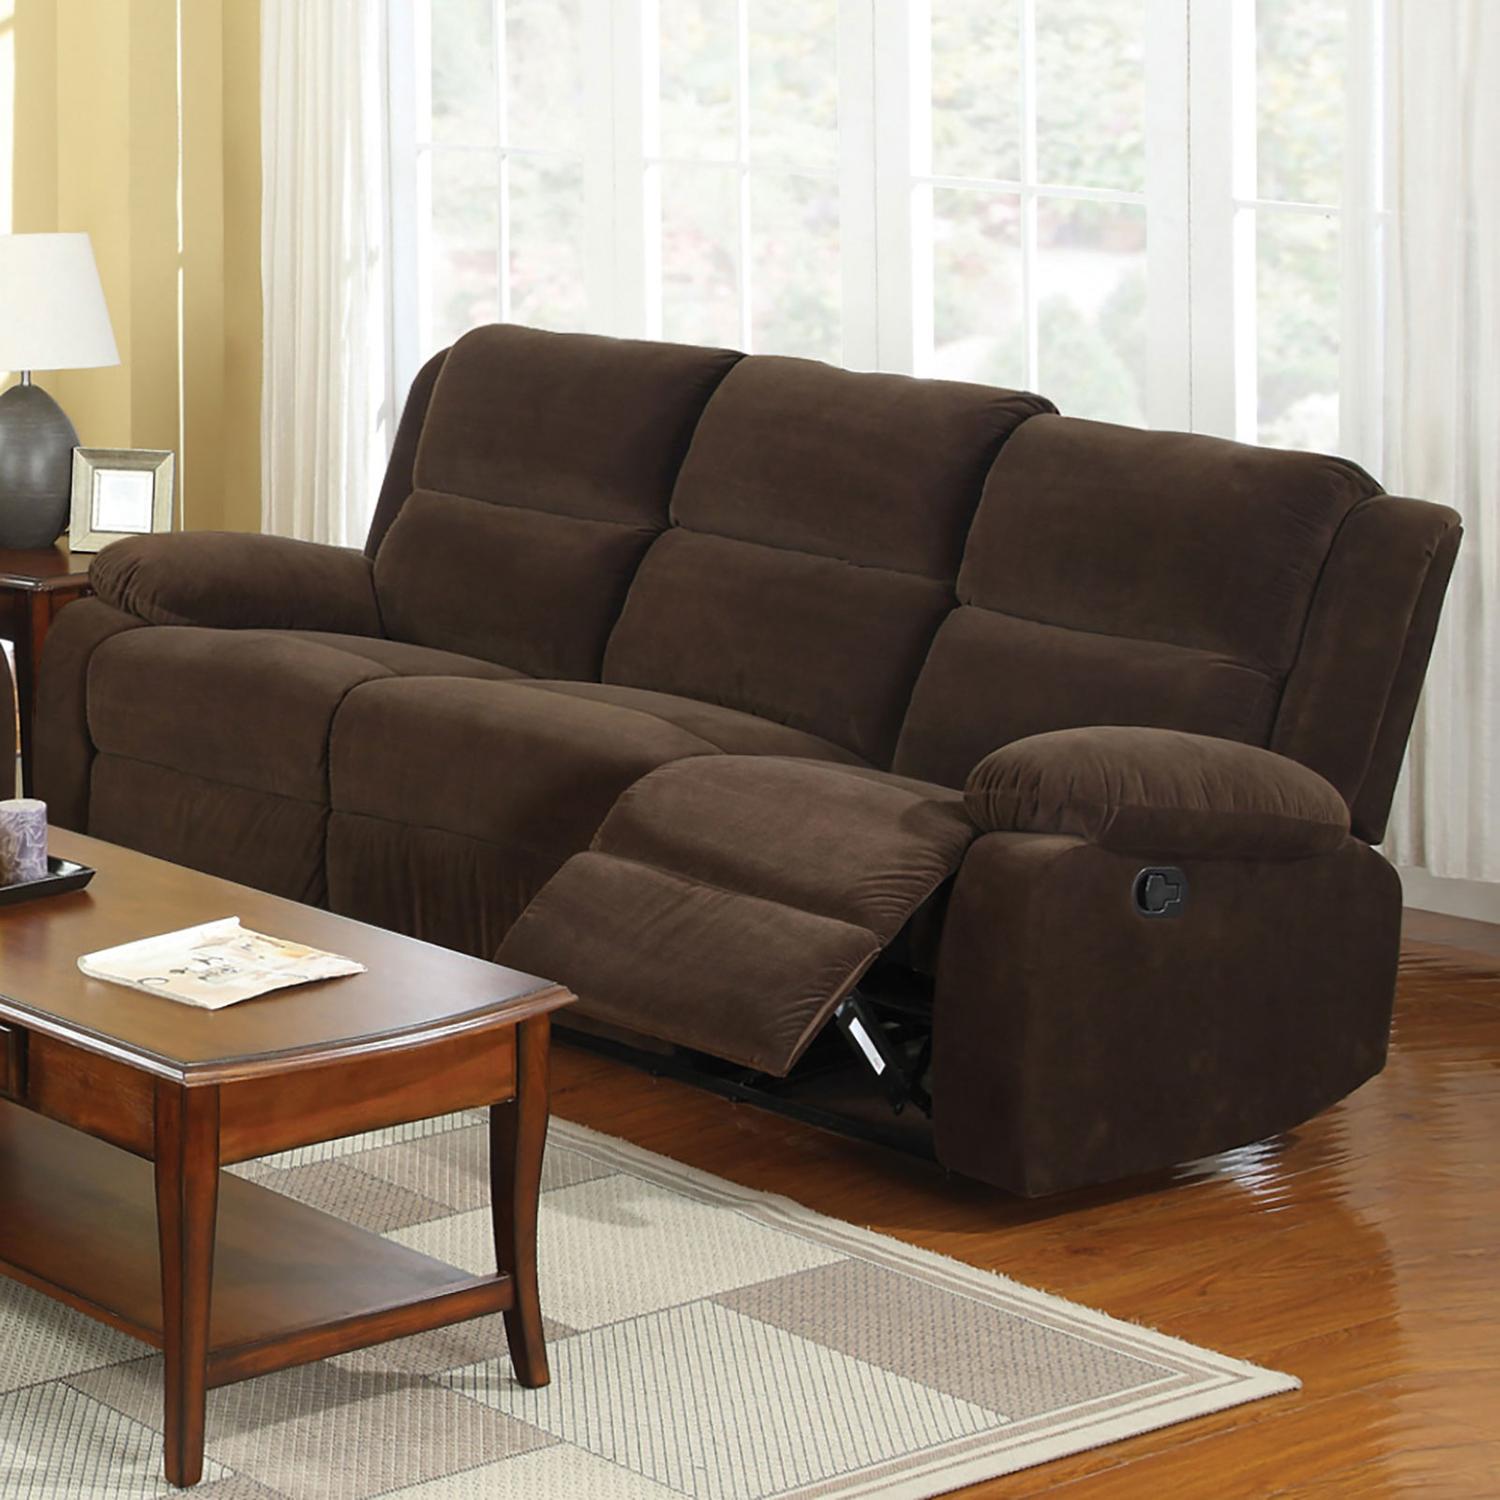 

    
CM6554-2PC Furniture of America Recliner Sofa and Loveseat
